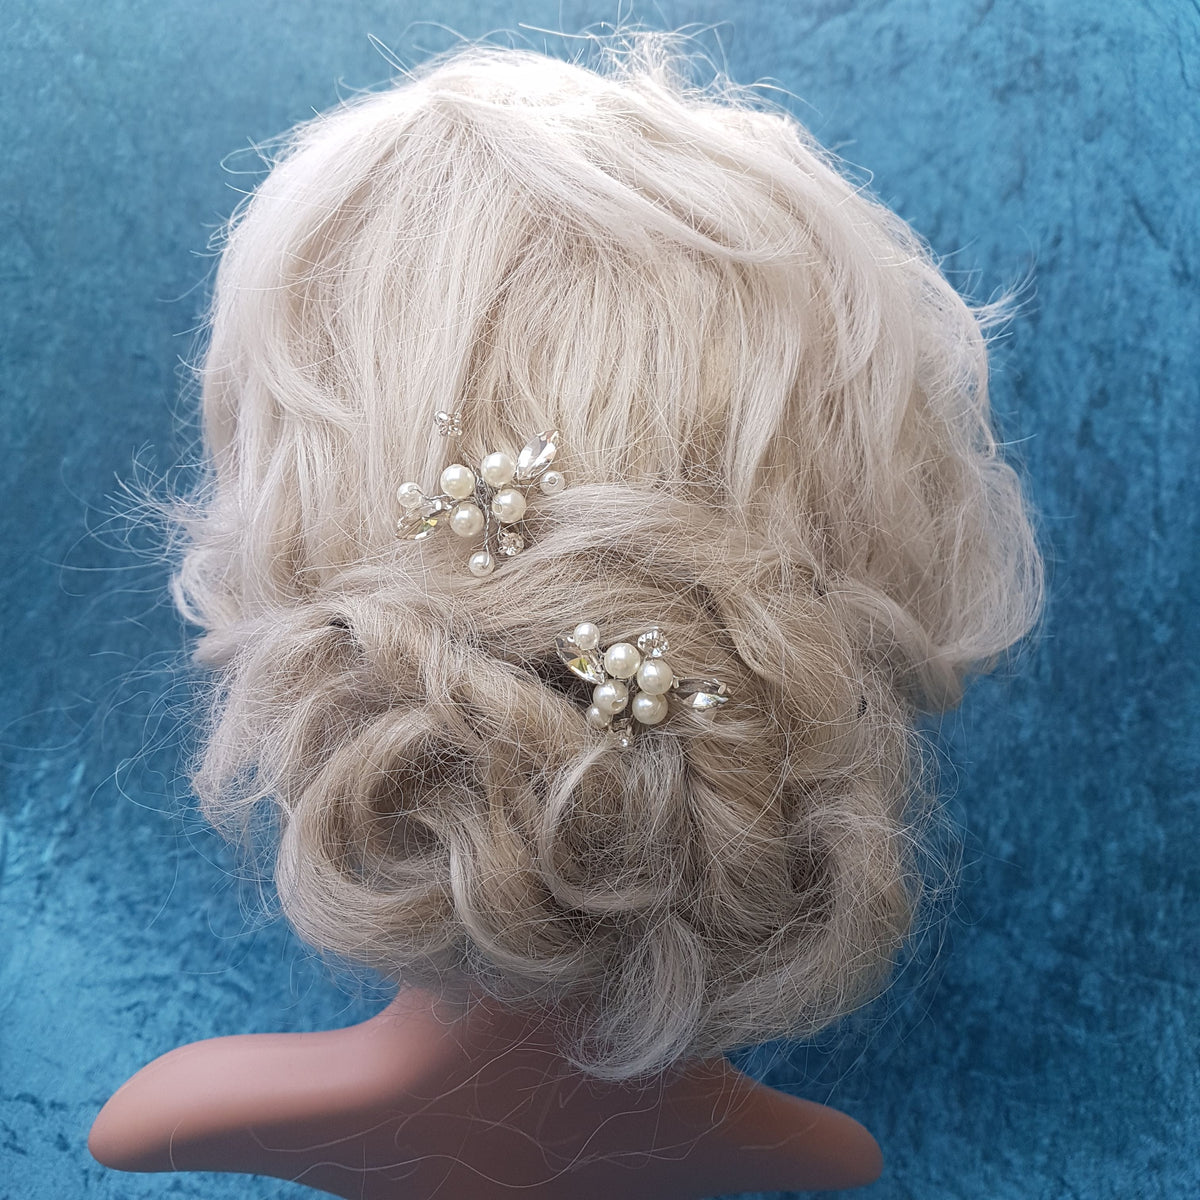 Lille enkel hårnål med perler og krystal - Hårpynt med blomster og perler til bryllup, konfirmation og fest